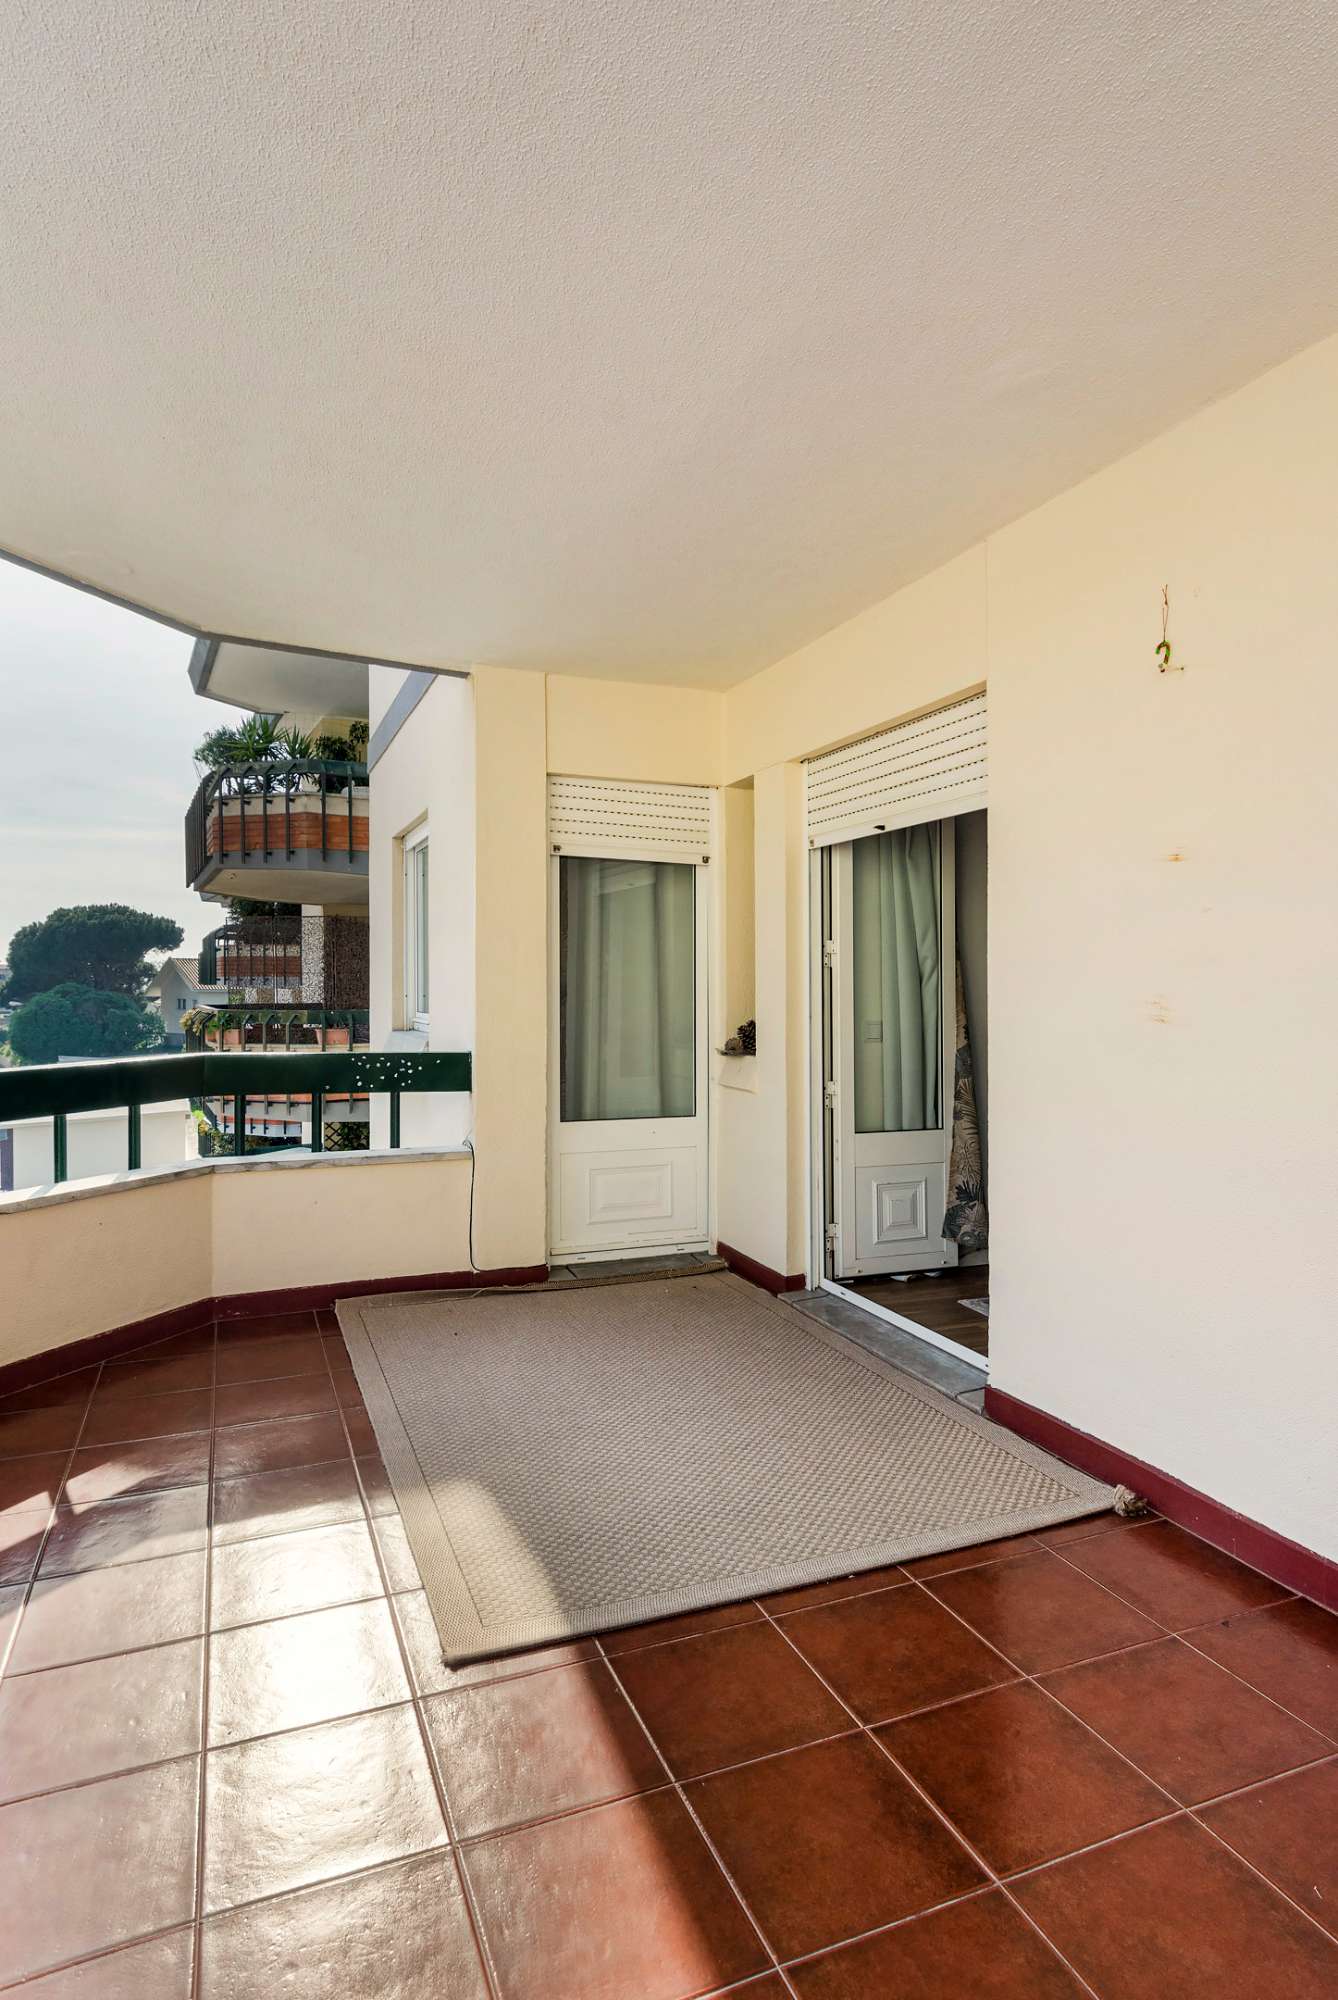 3 bedroom apartment with balcony near the center of Cascais